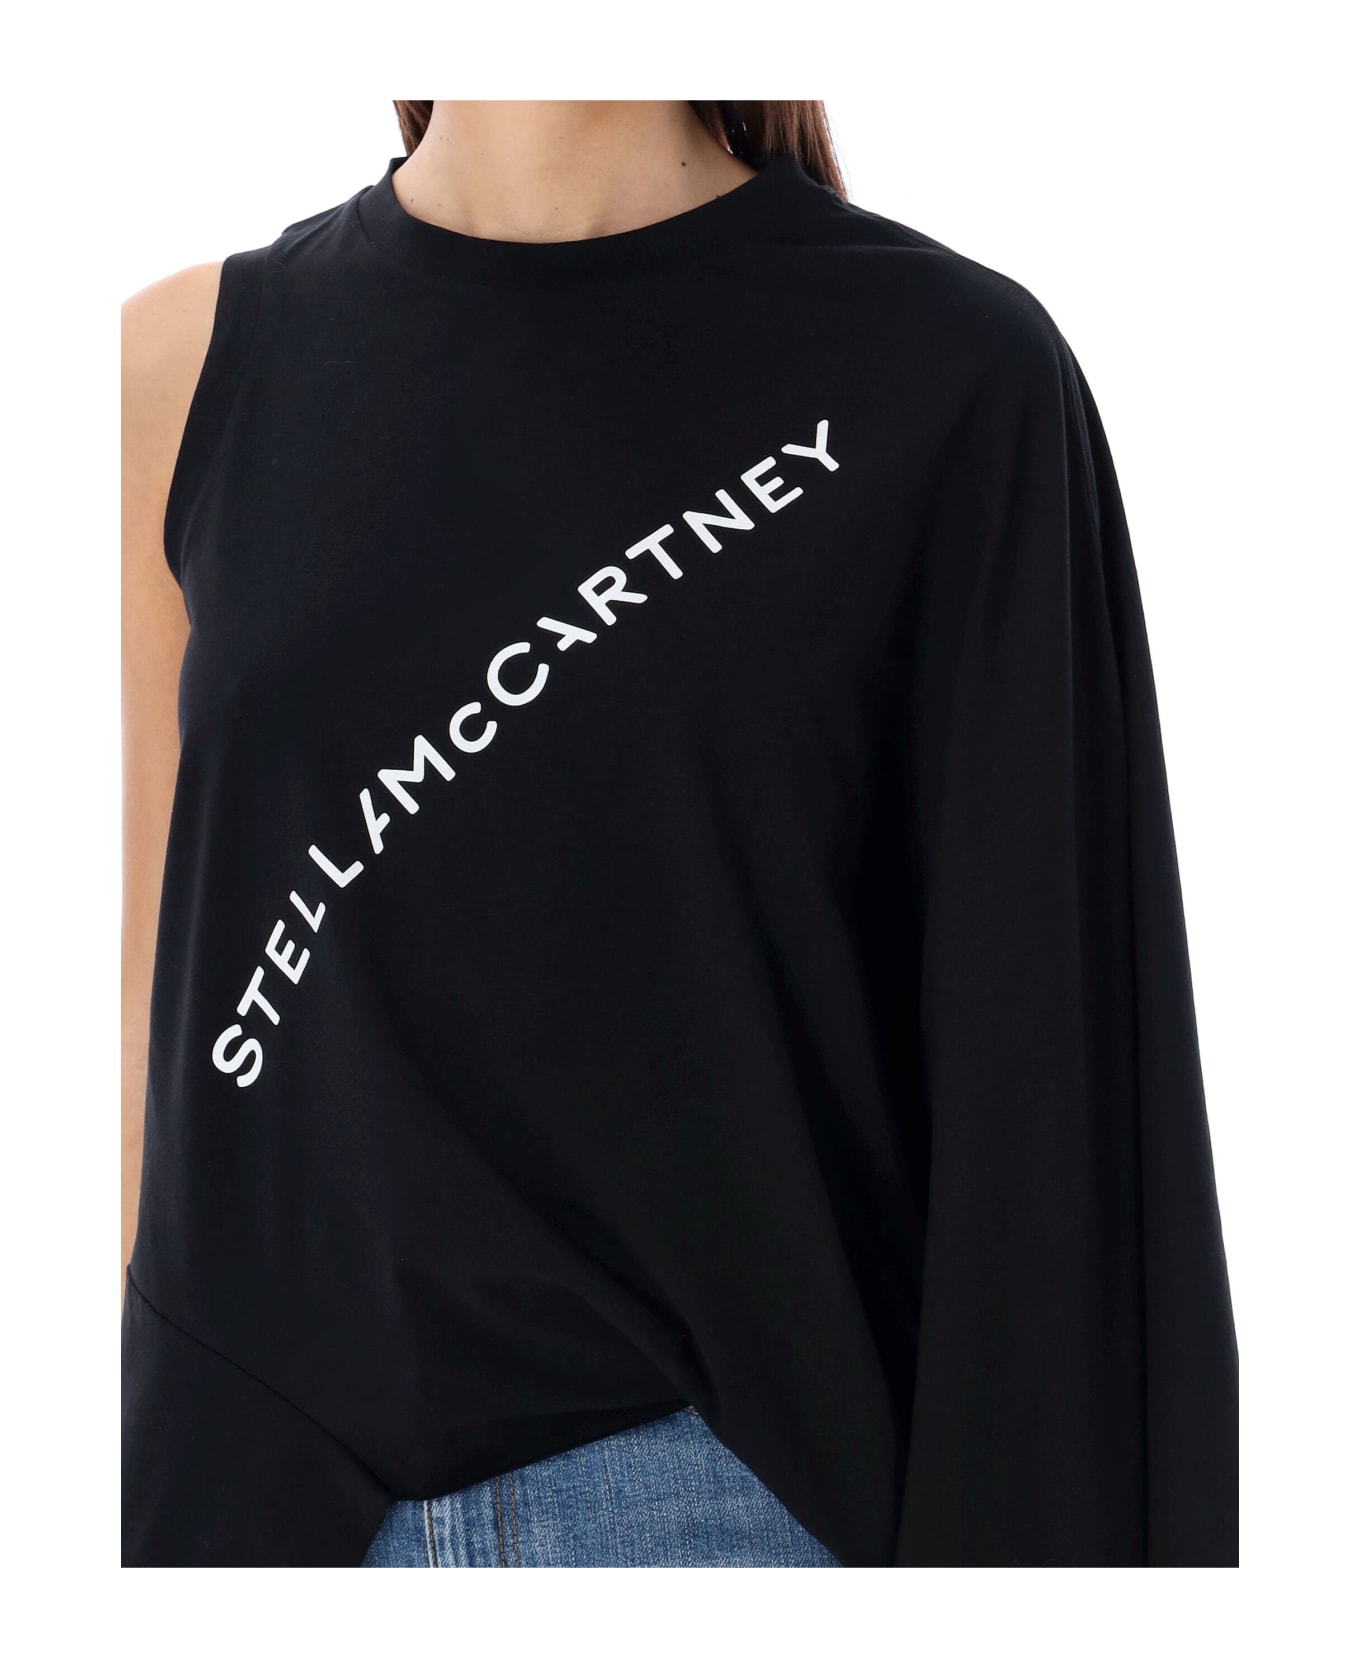 Stella McCartney Fluid Logo One Sleeve Top - Black Tシャツ